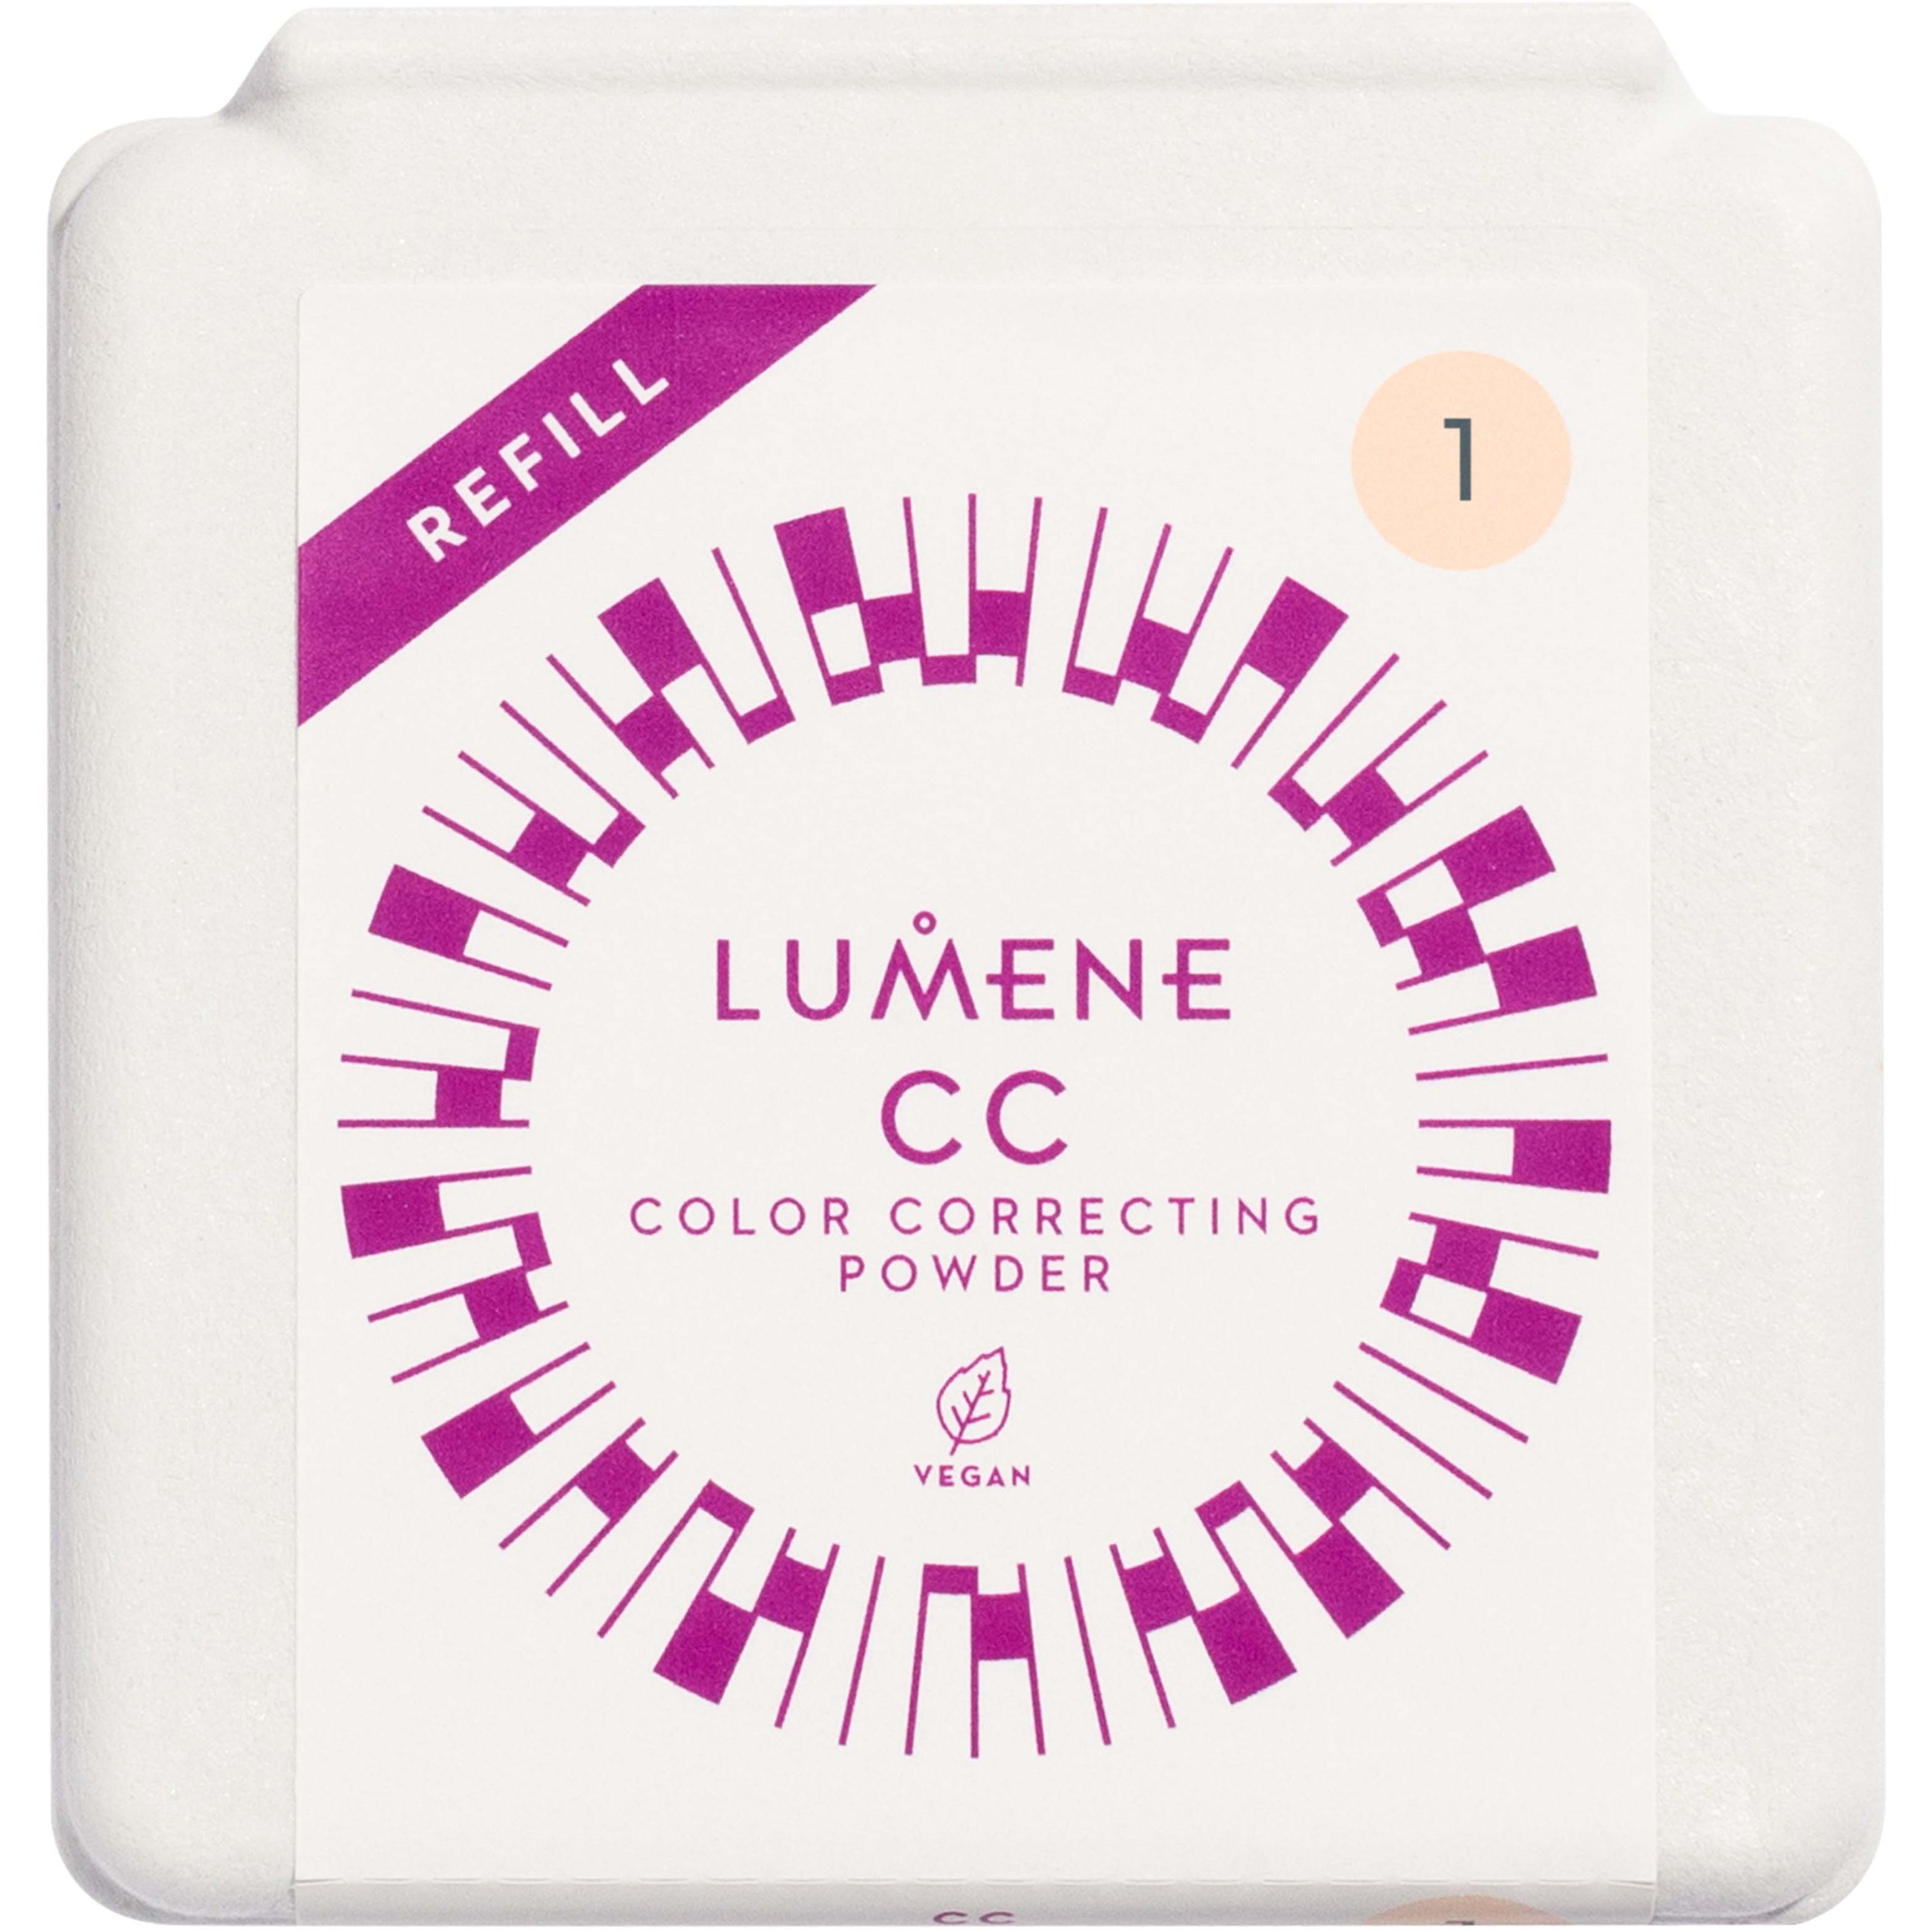 Lumene CC Color Correcting Powder Refill 1